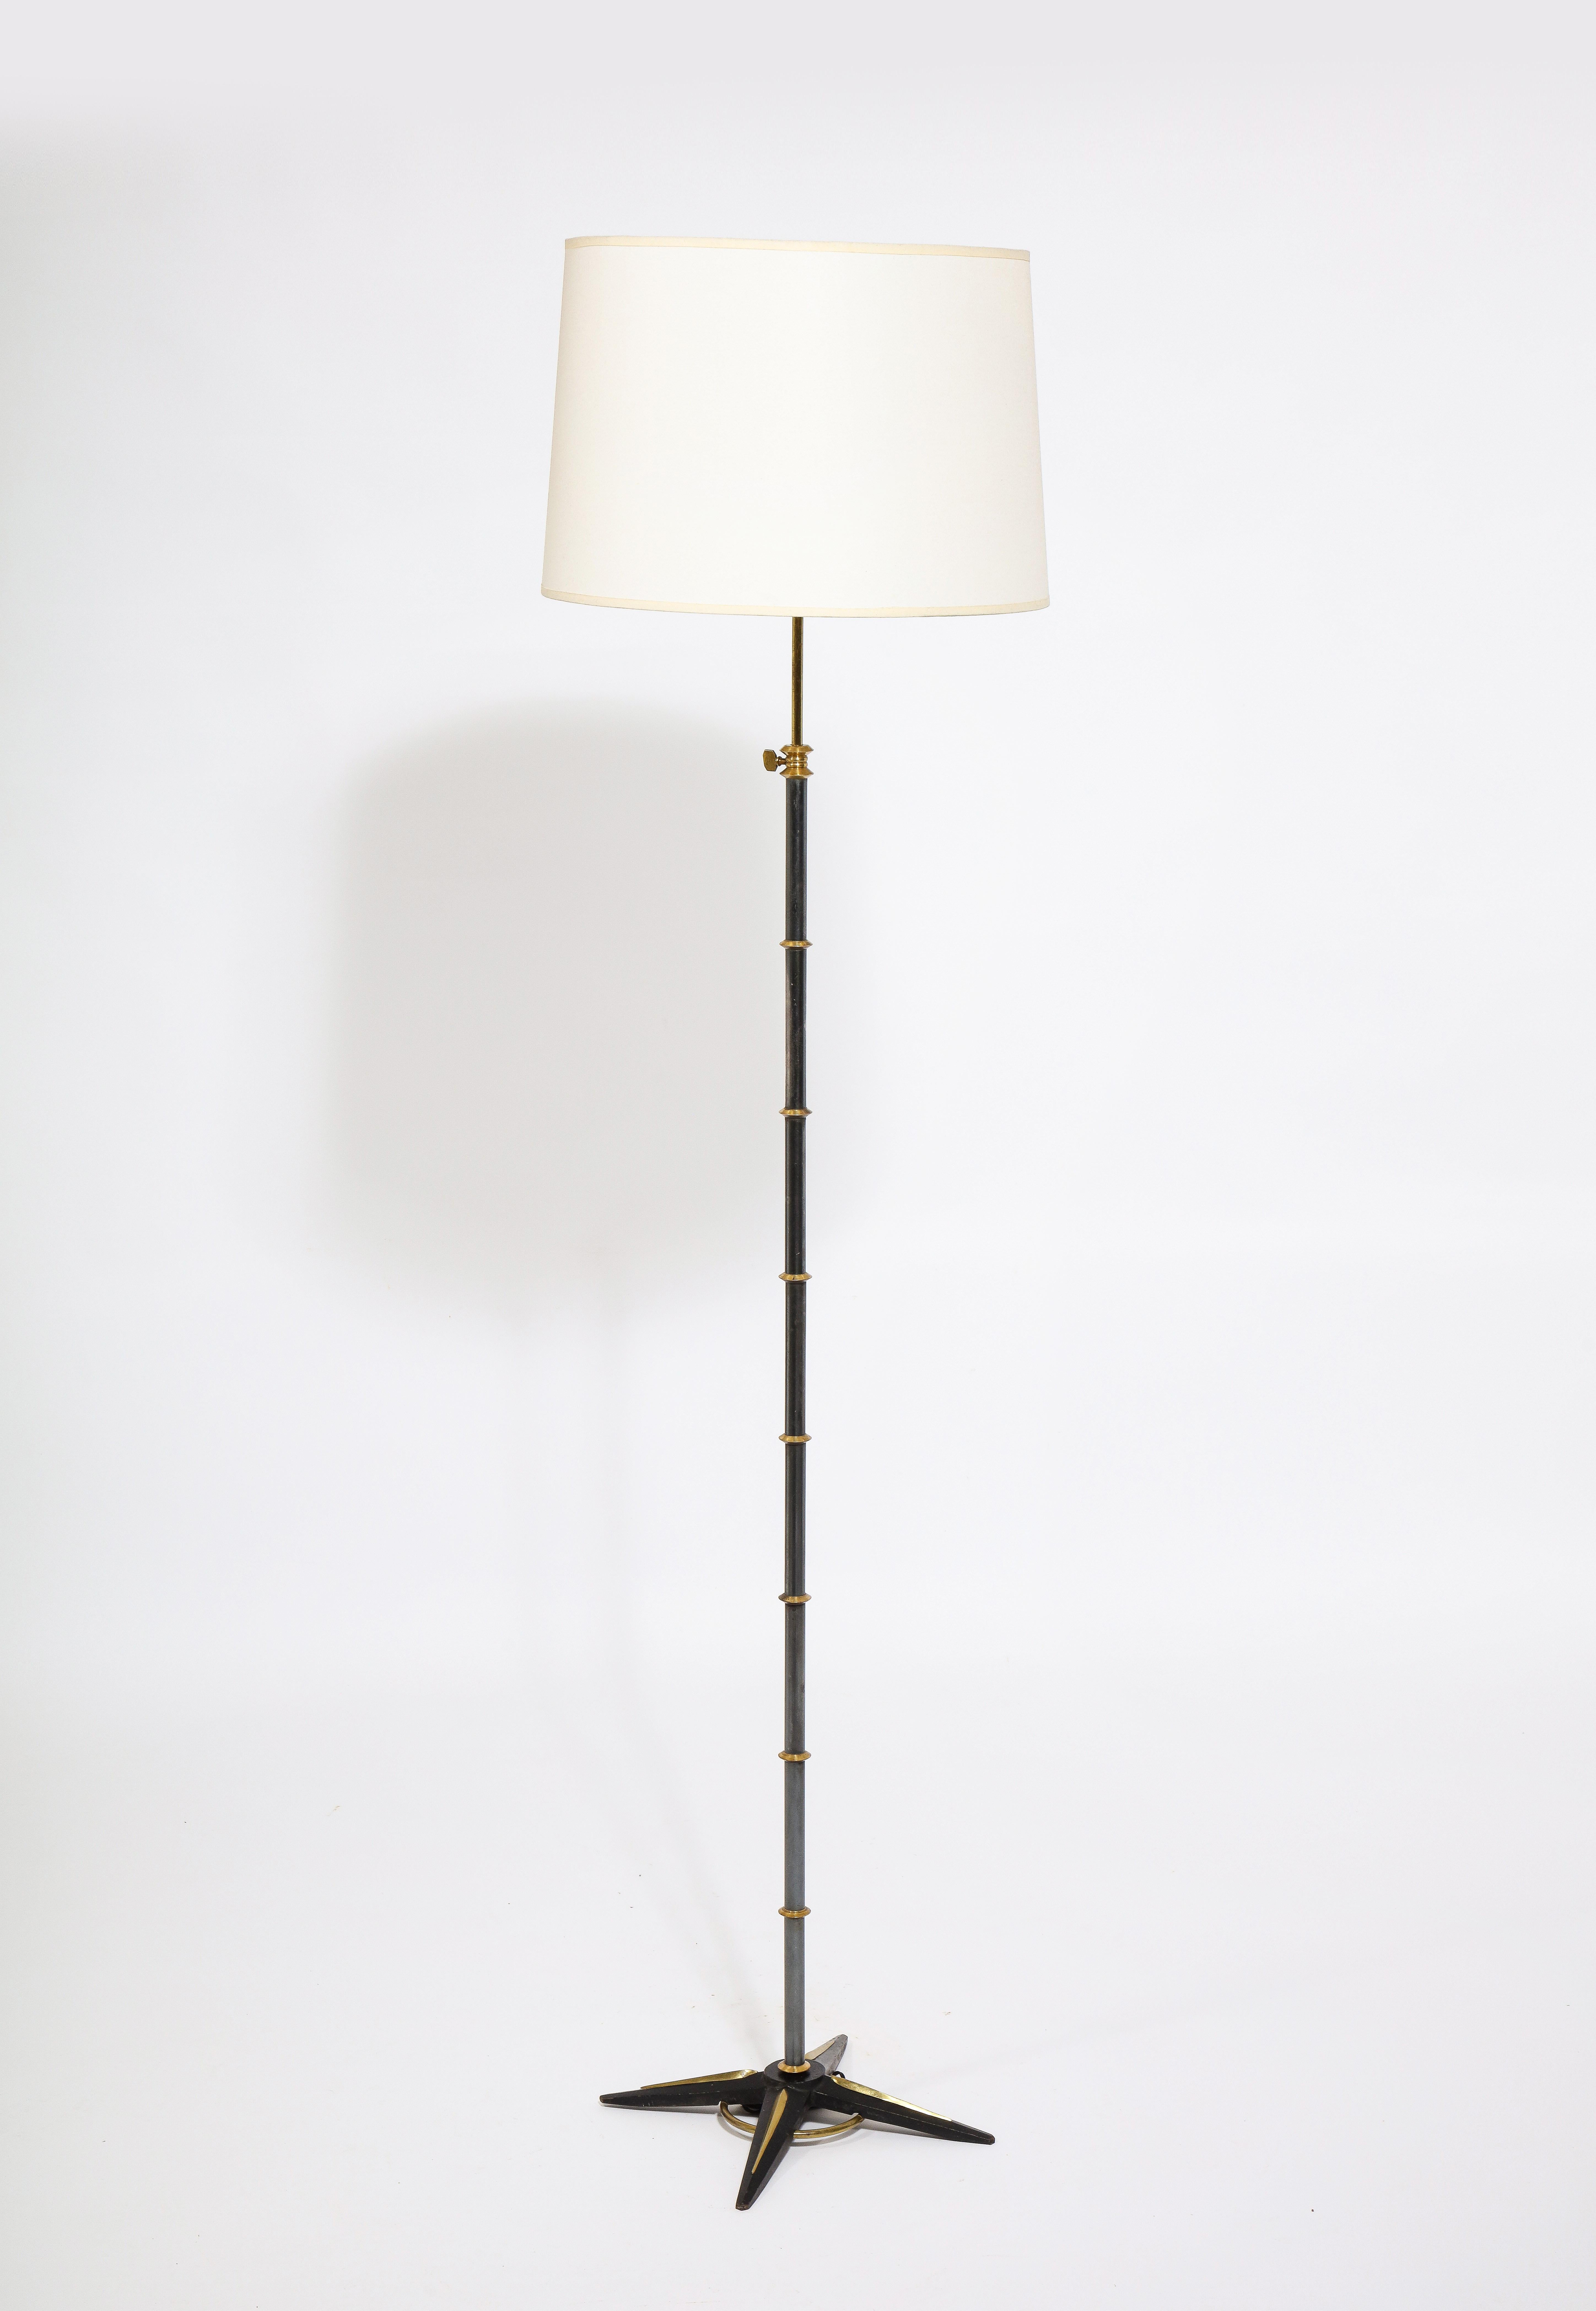 Neoclassical Revival Adjustable Height Floor Lamp by Gilles Sermadiras, France, 1950's For Sale